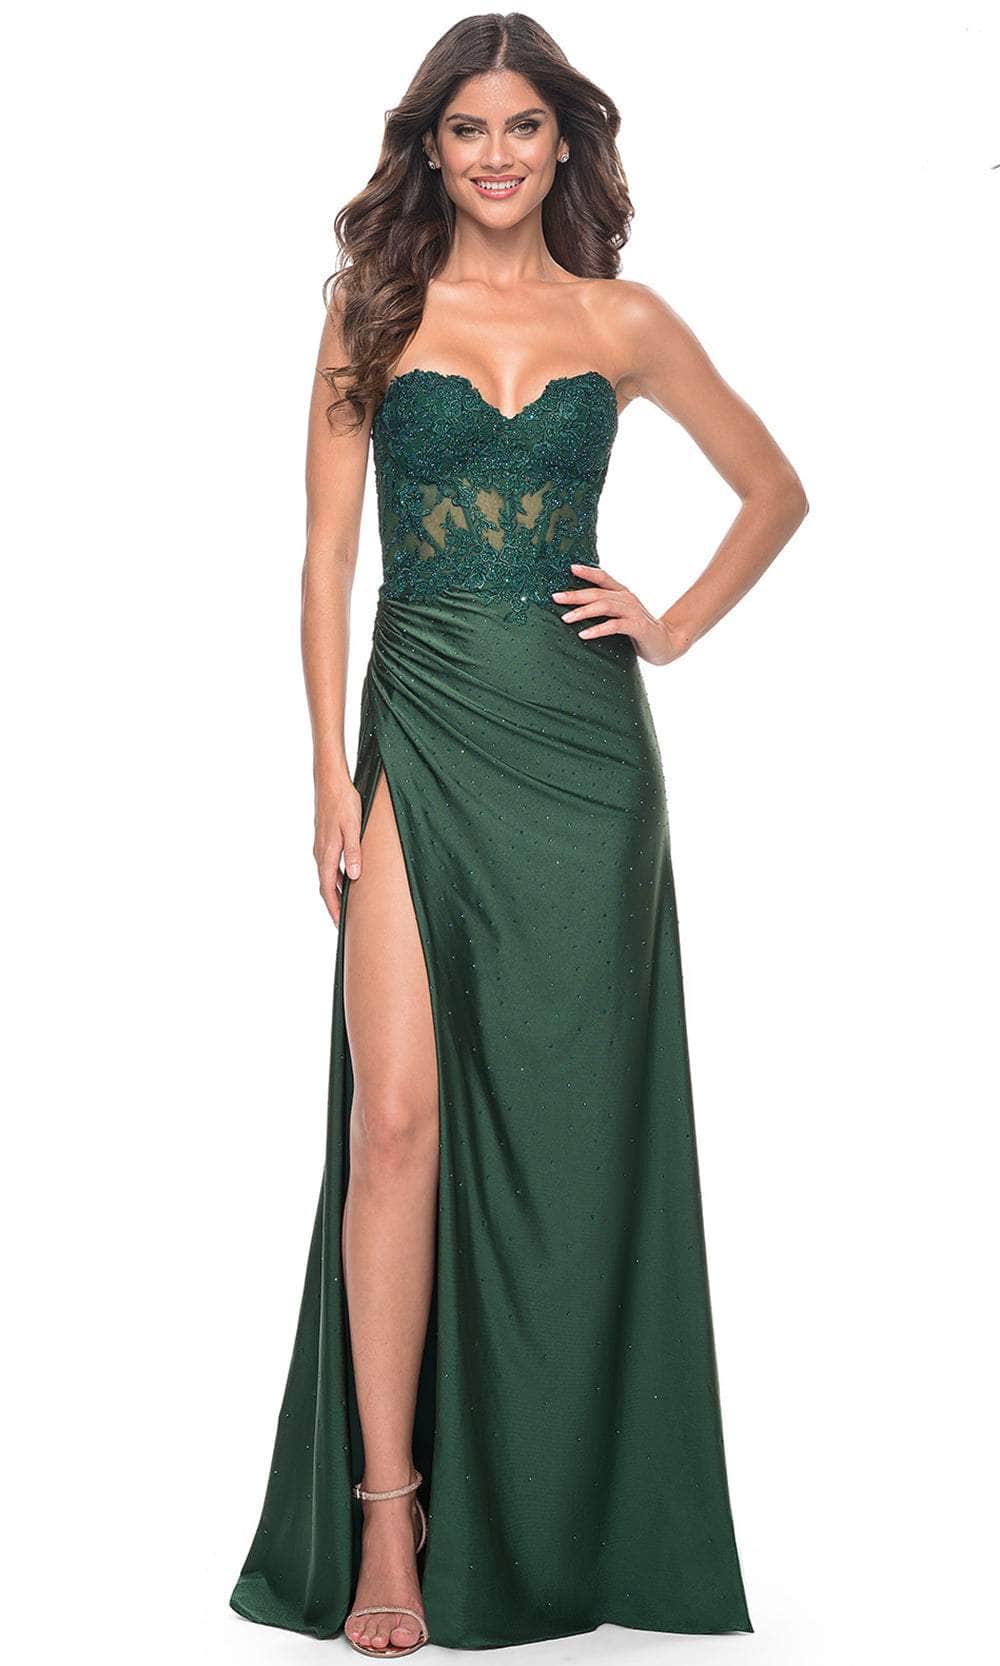 La Femme 32011 - Rhinestone Sweetheart Prom Dress Prom Dresses 00 / Dark Emerald